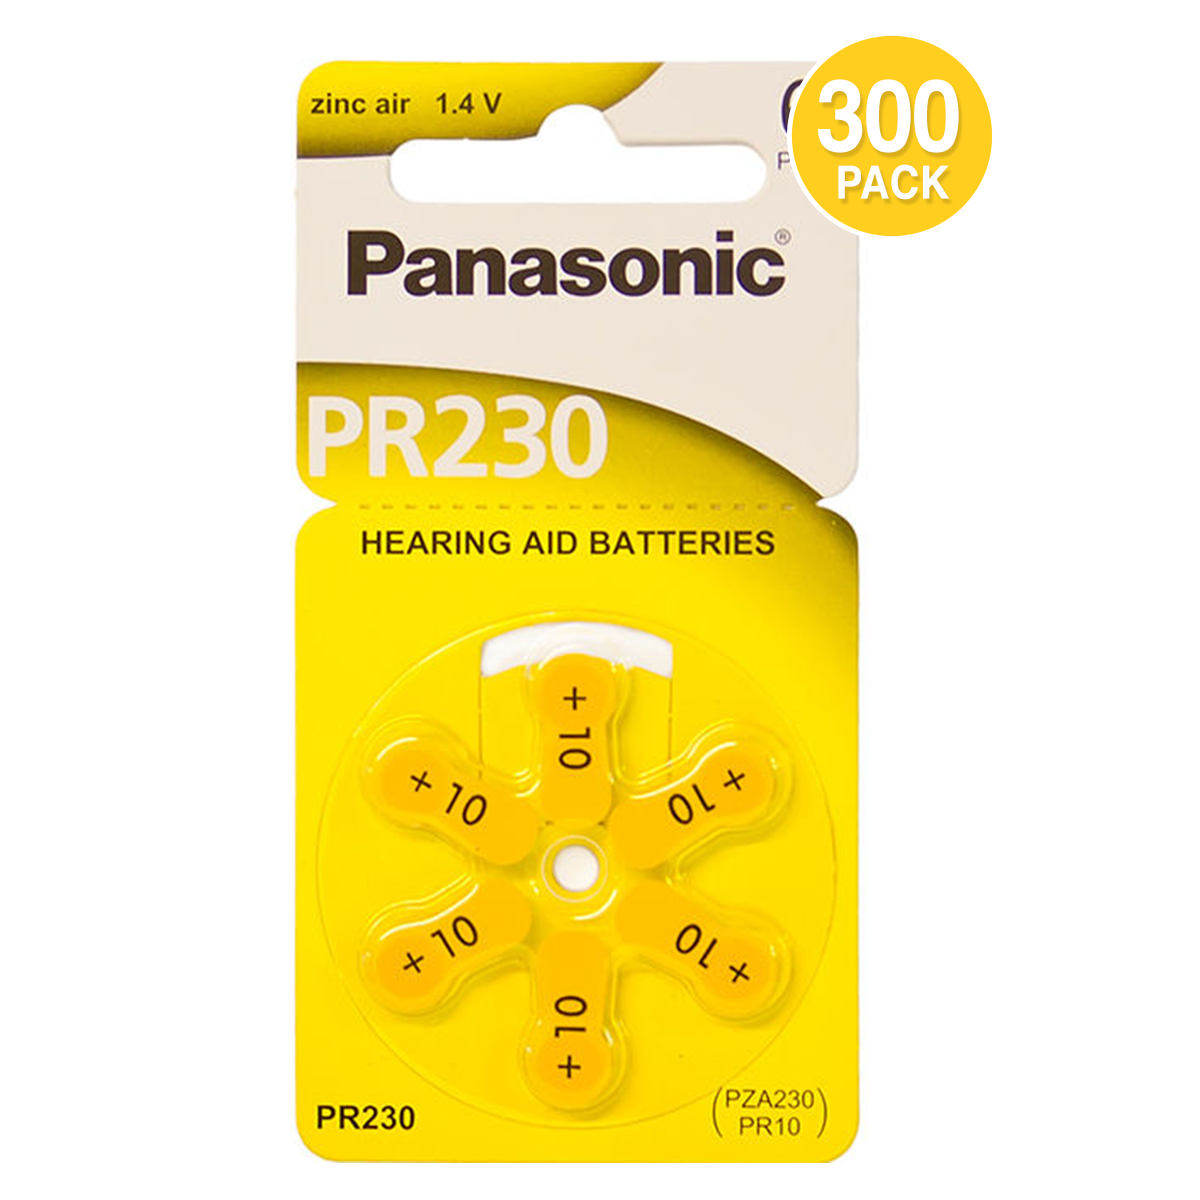 Panasonic Size 10 Hearing Aid Batteries 1.4 Volt Zinc Air (300 Batteries)